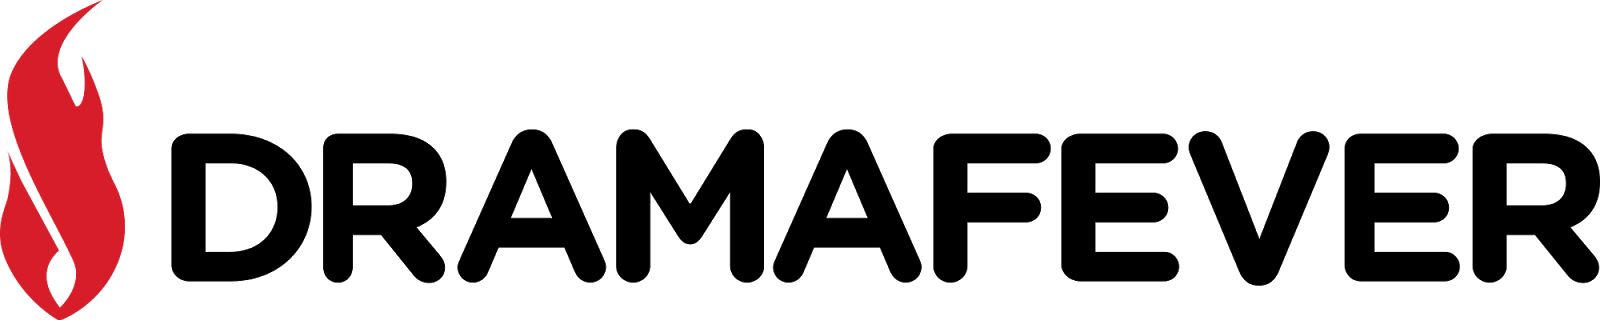 Drama-Fever-White-Logo